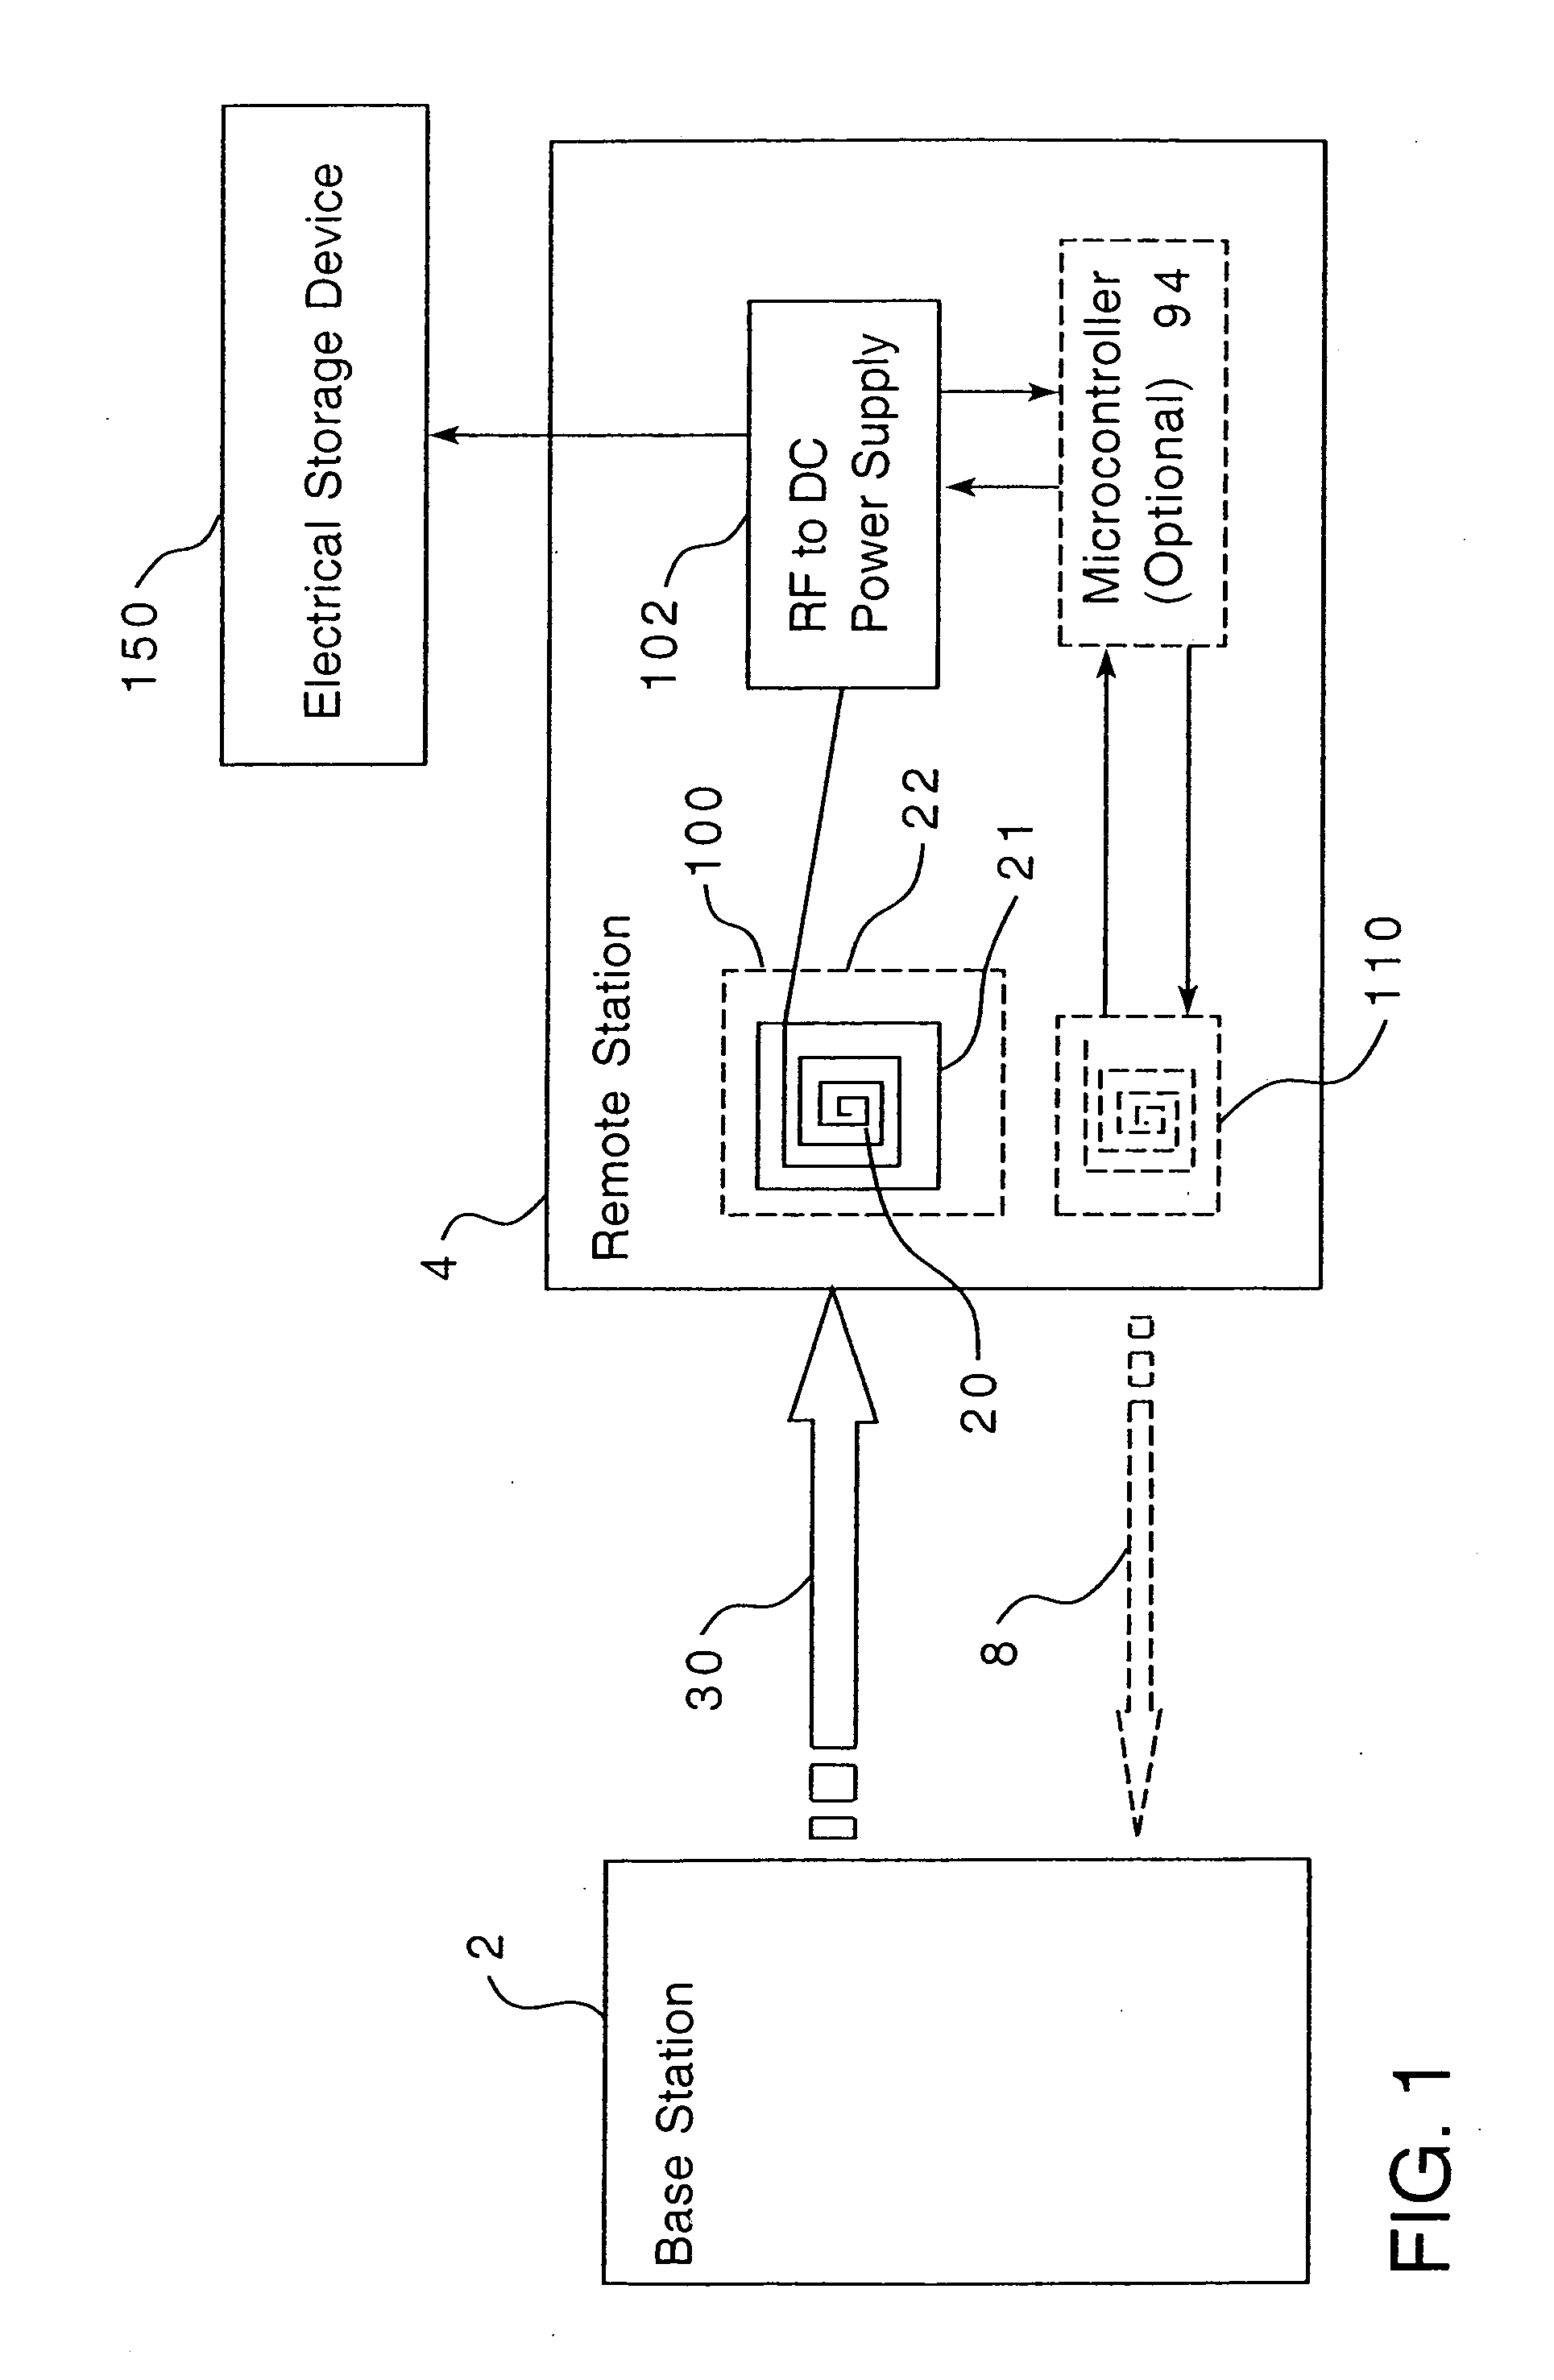 Recharging method and associated apparatus